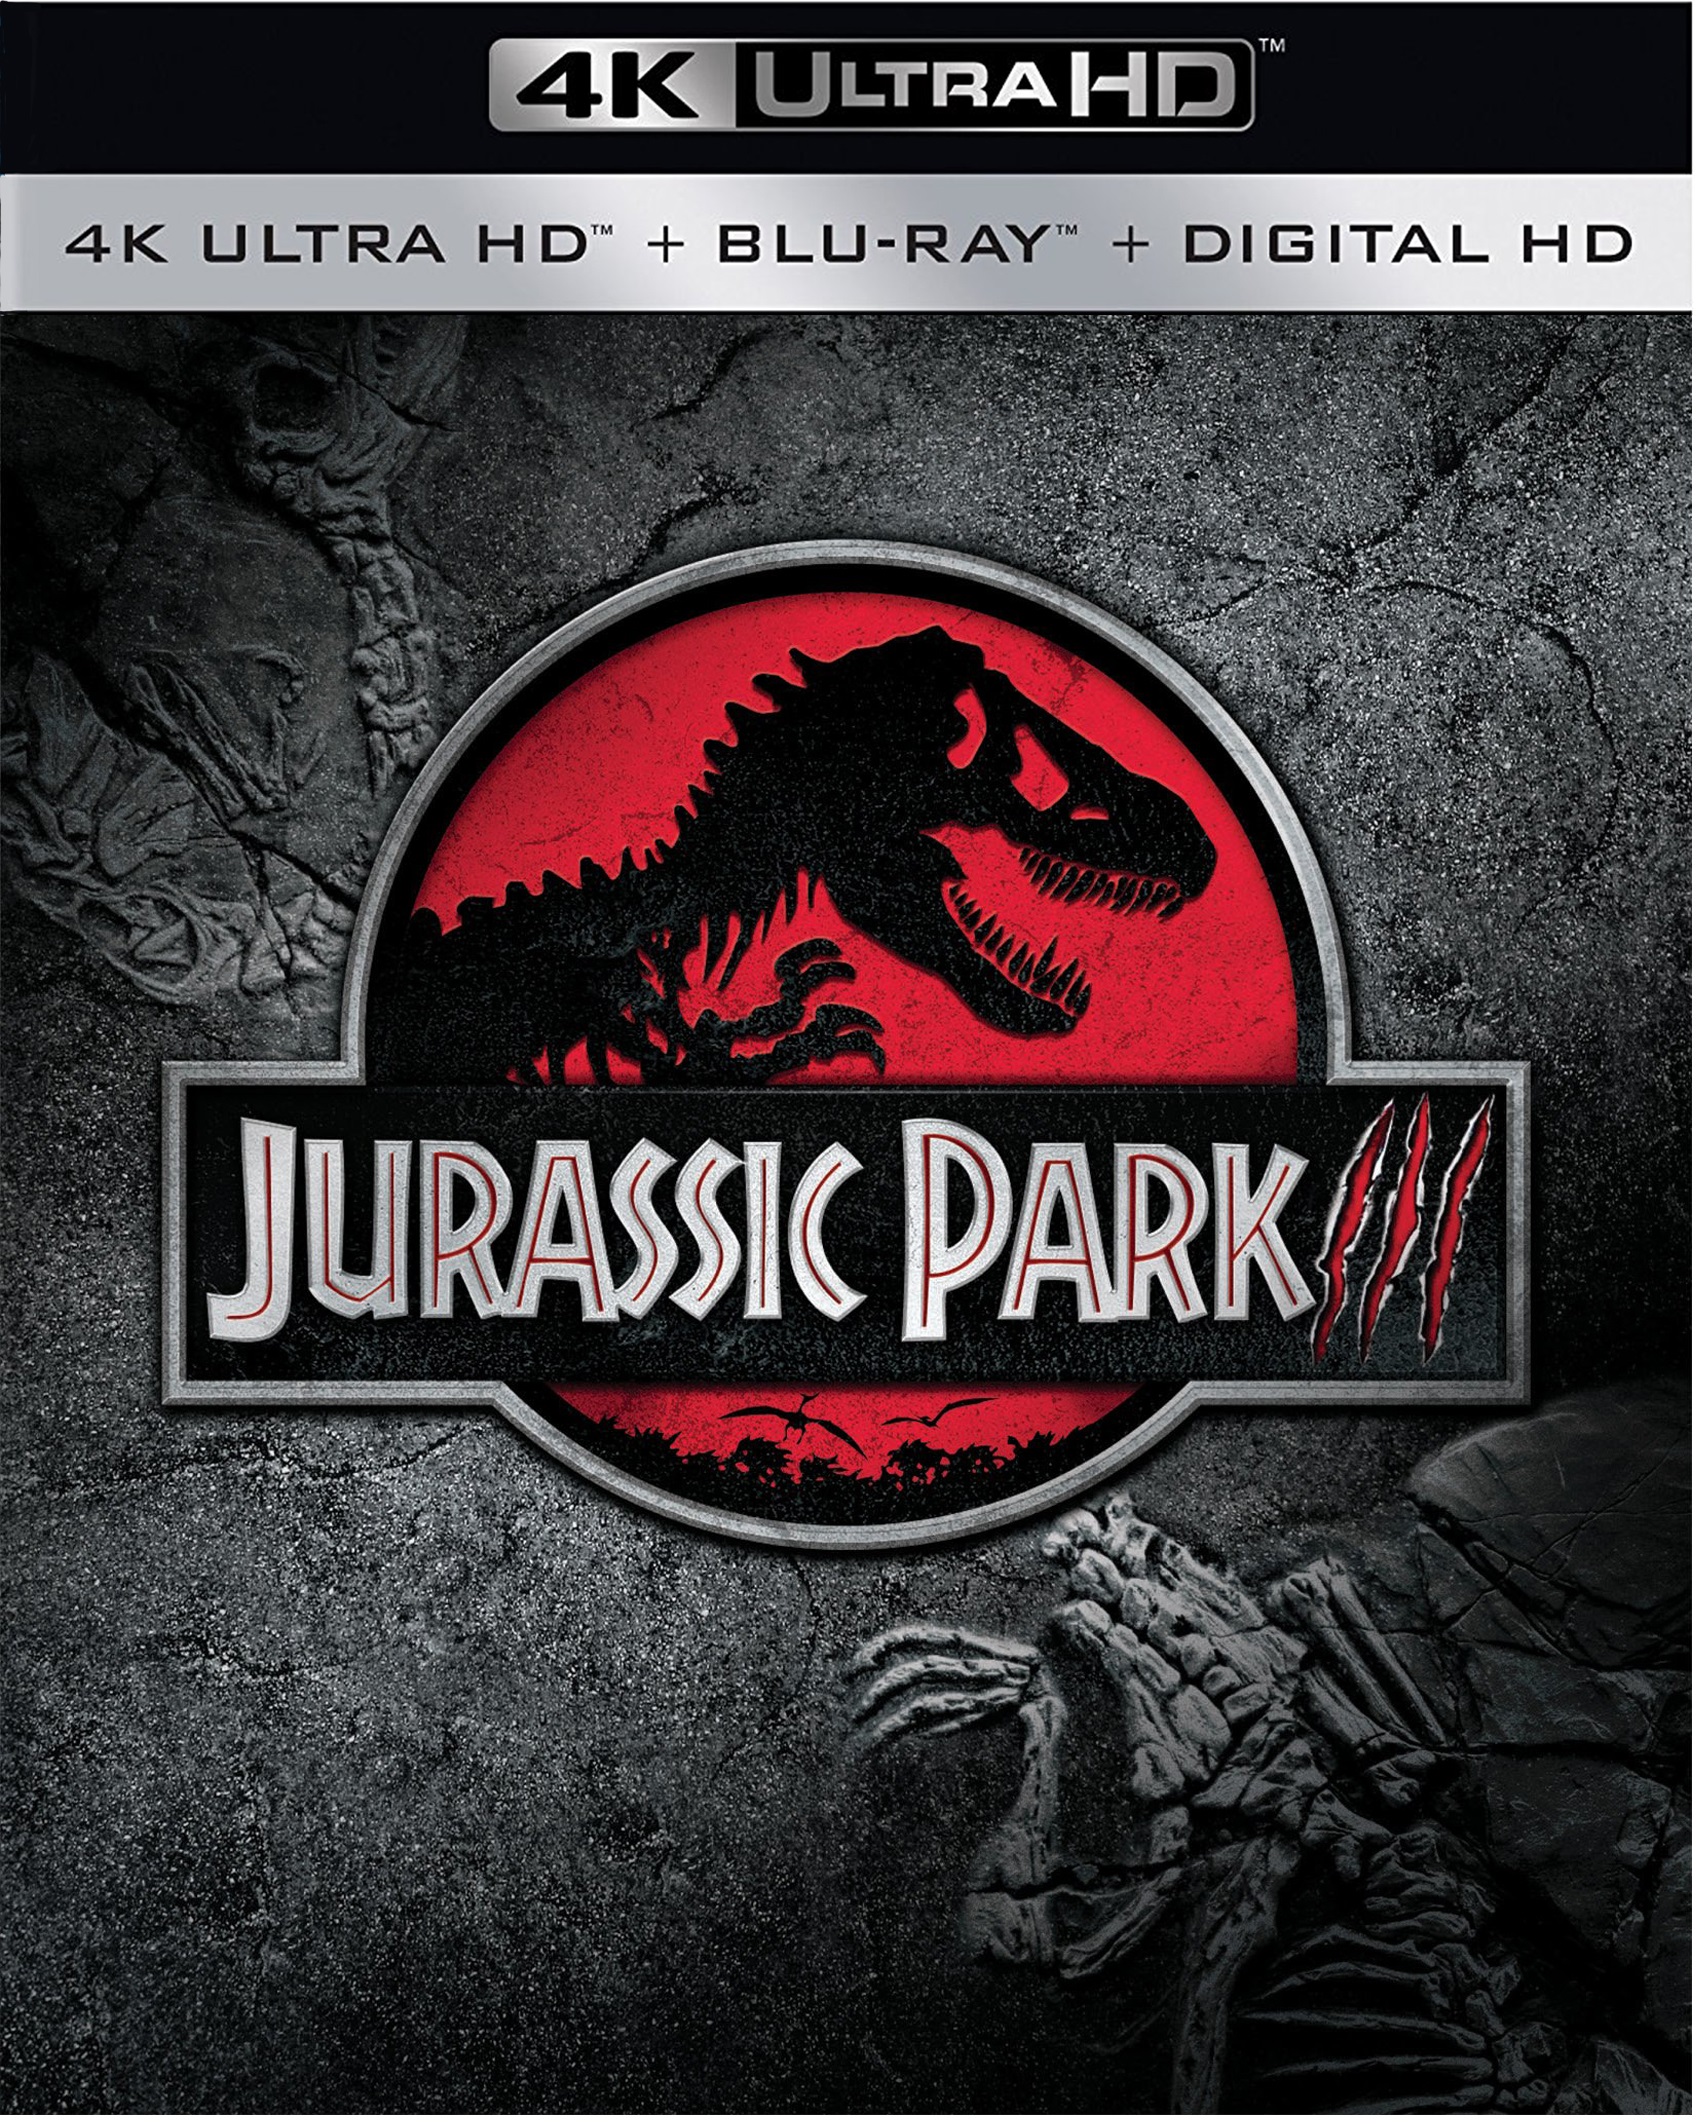 Jurassic Park lll 4K Blu-Ray by GameUnleasher57 on DeviantArt